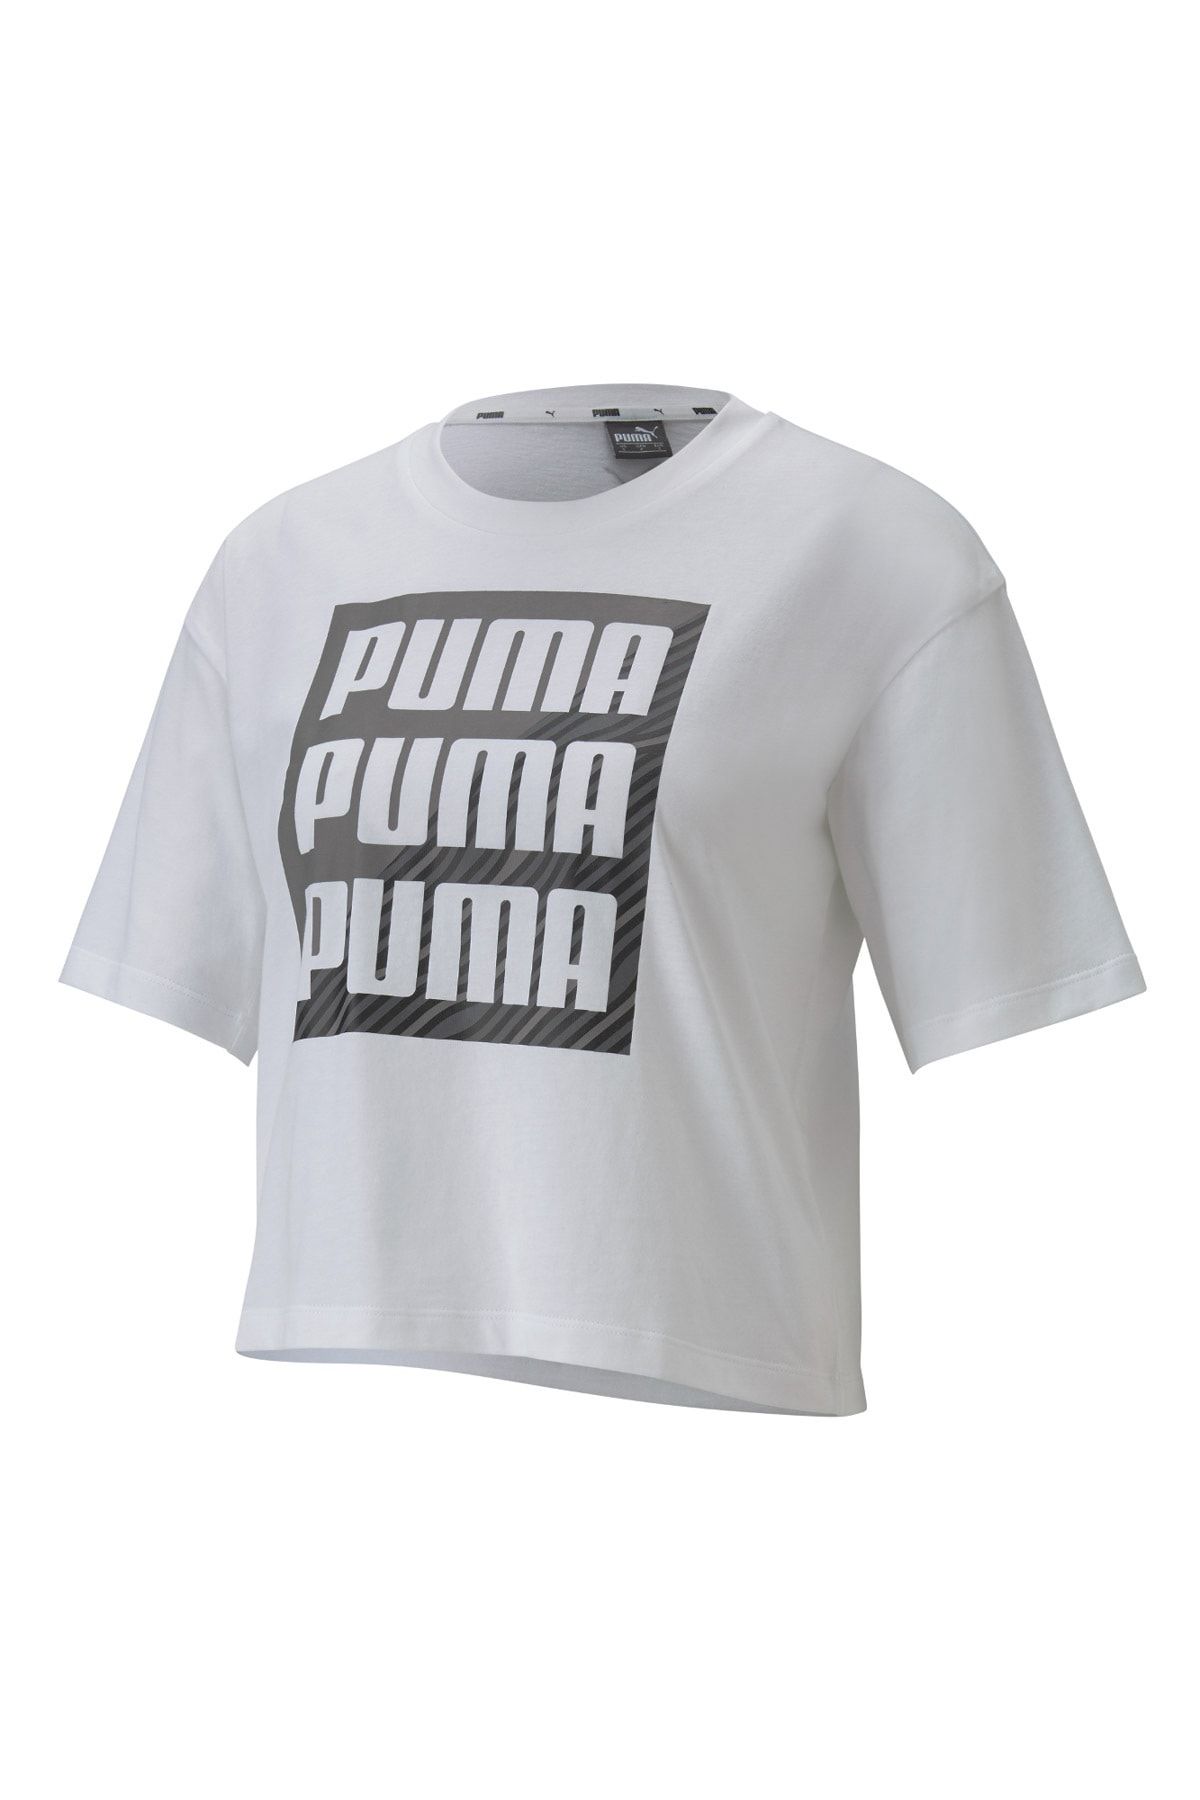 Puma Kadın Spor Sweatshirt - SUMMER PRINT Graphic - 58416902